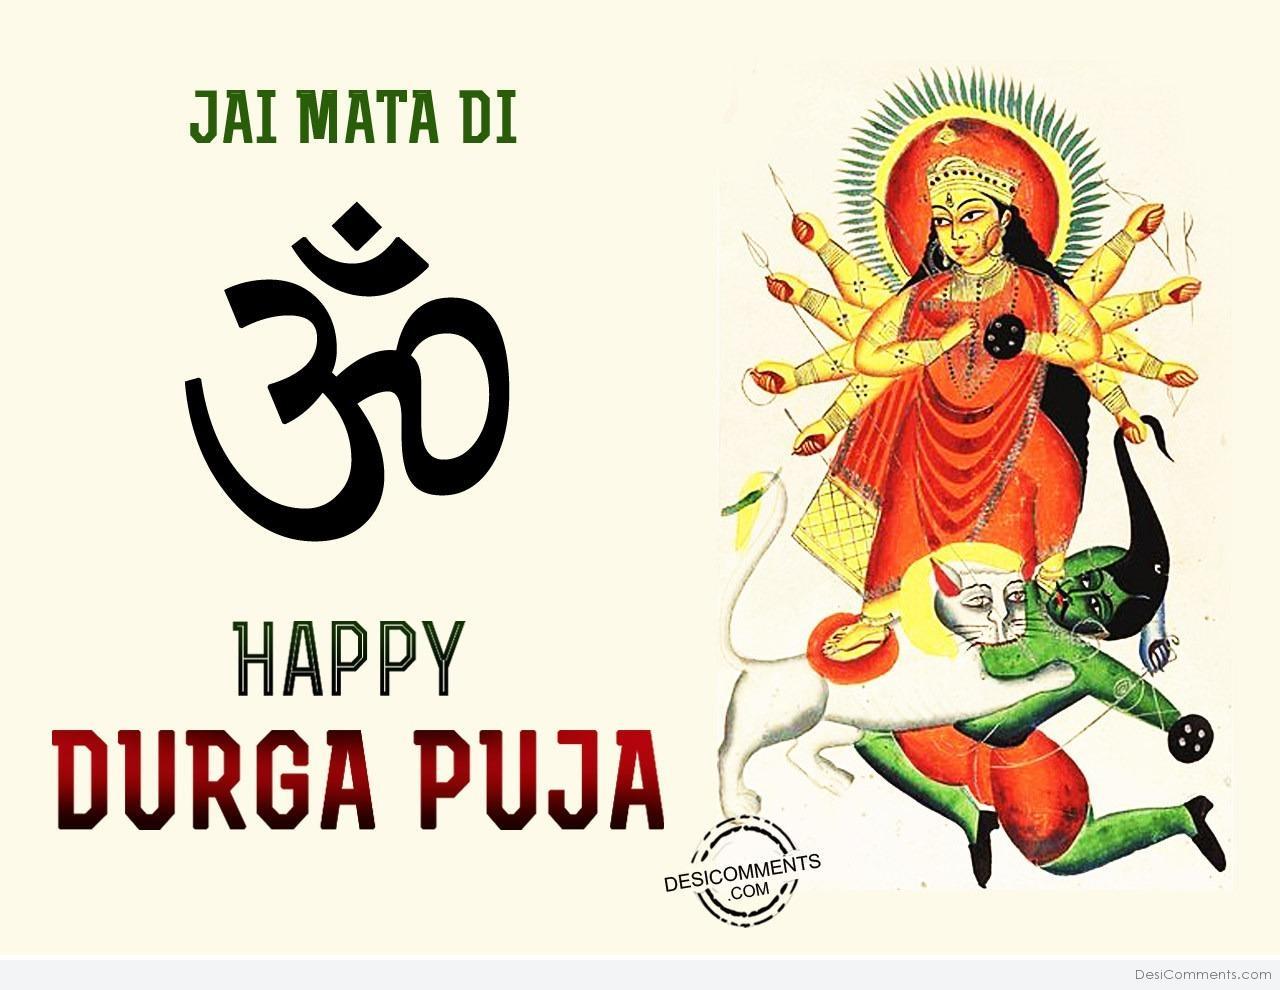 Durga Puja Picture, Image, Graphics